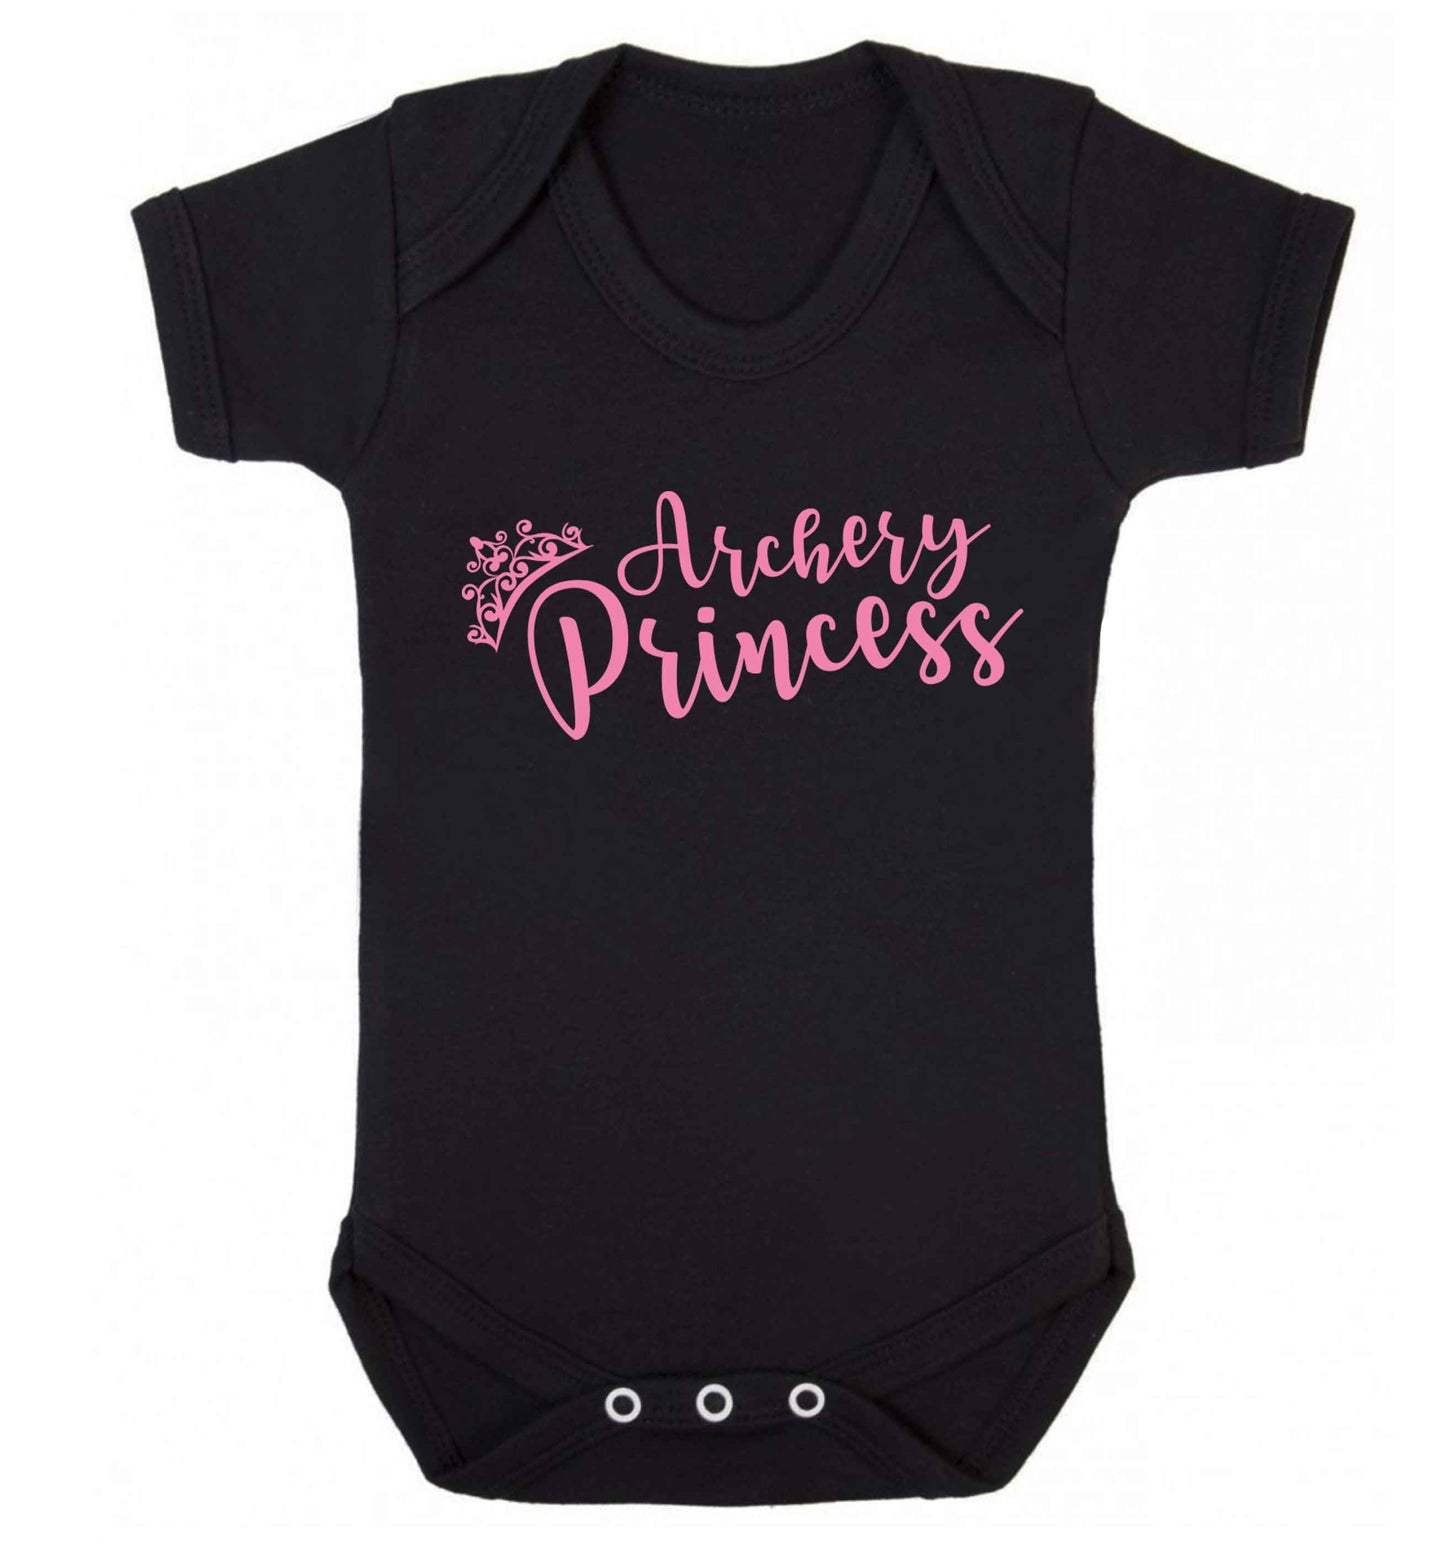 Archery princess Baby Vest black 18-24 months